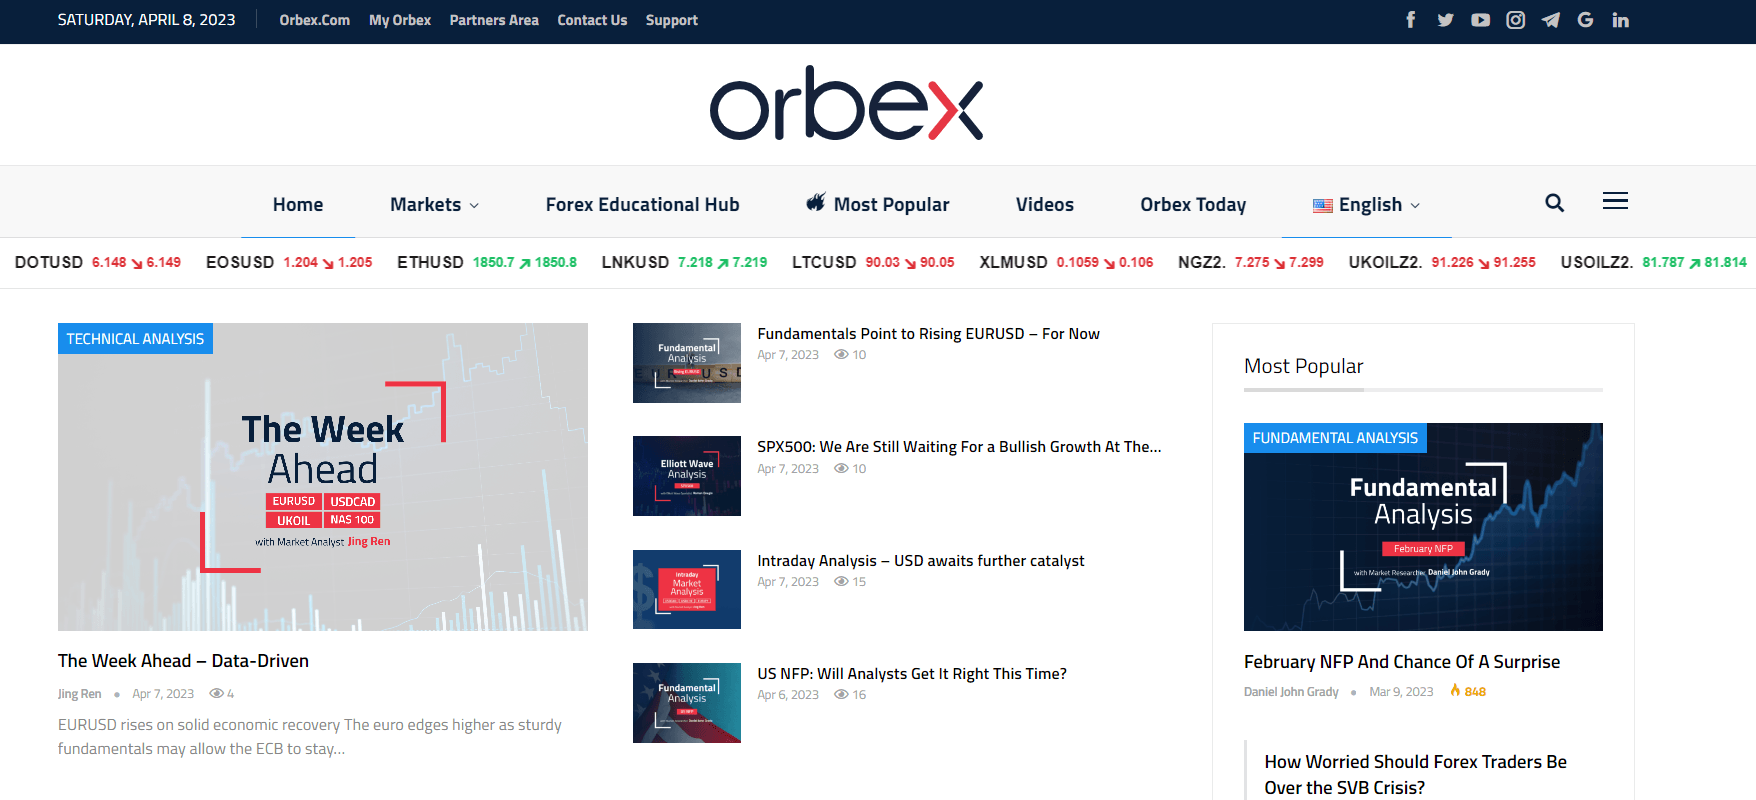 Orbex Blog